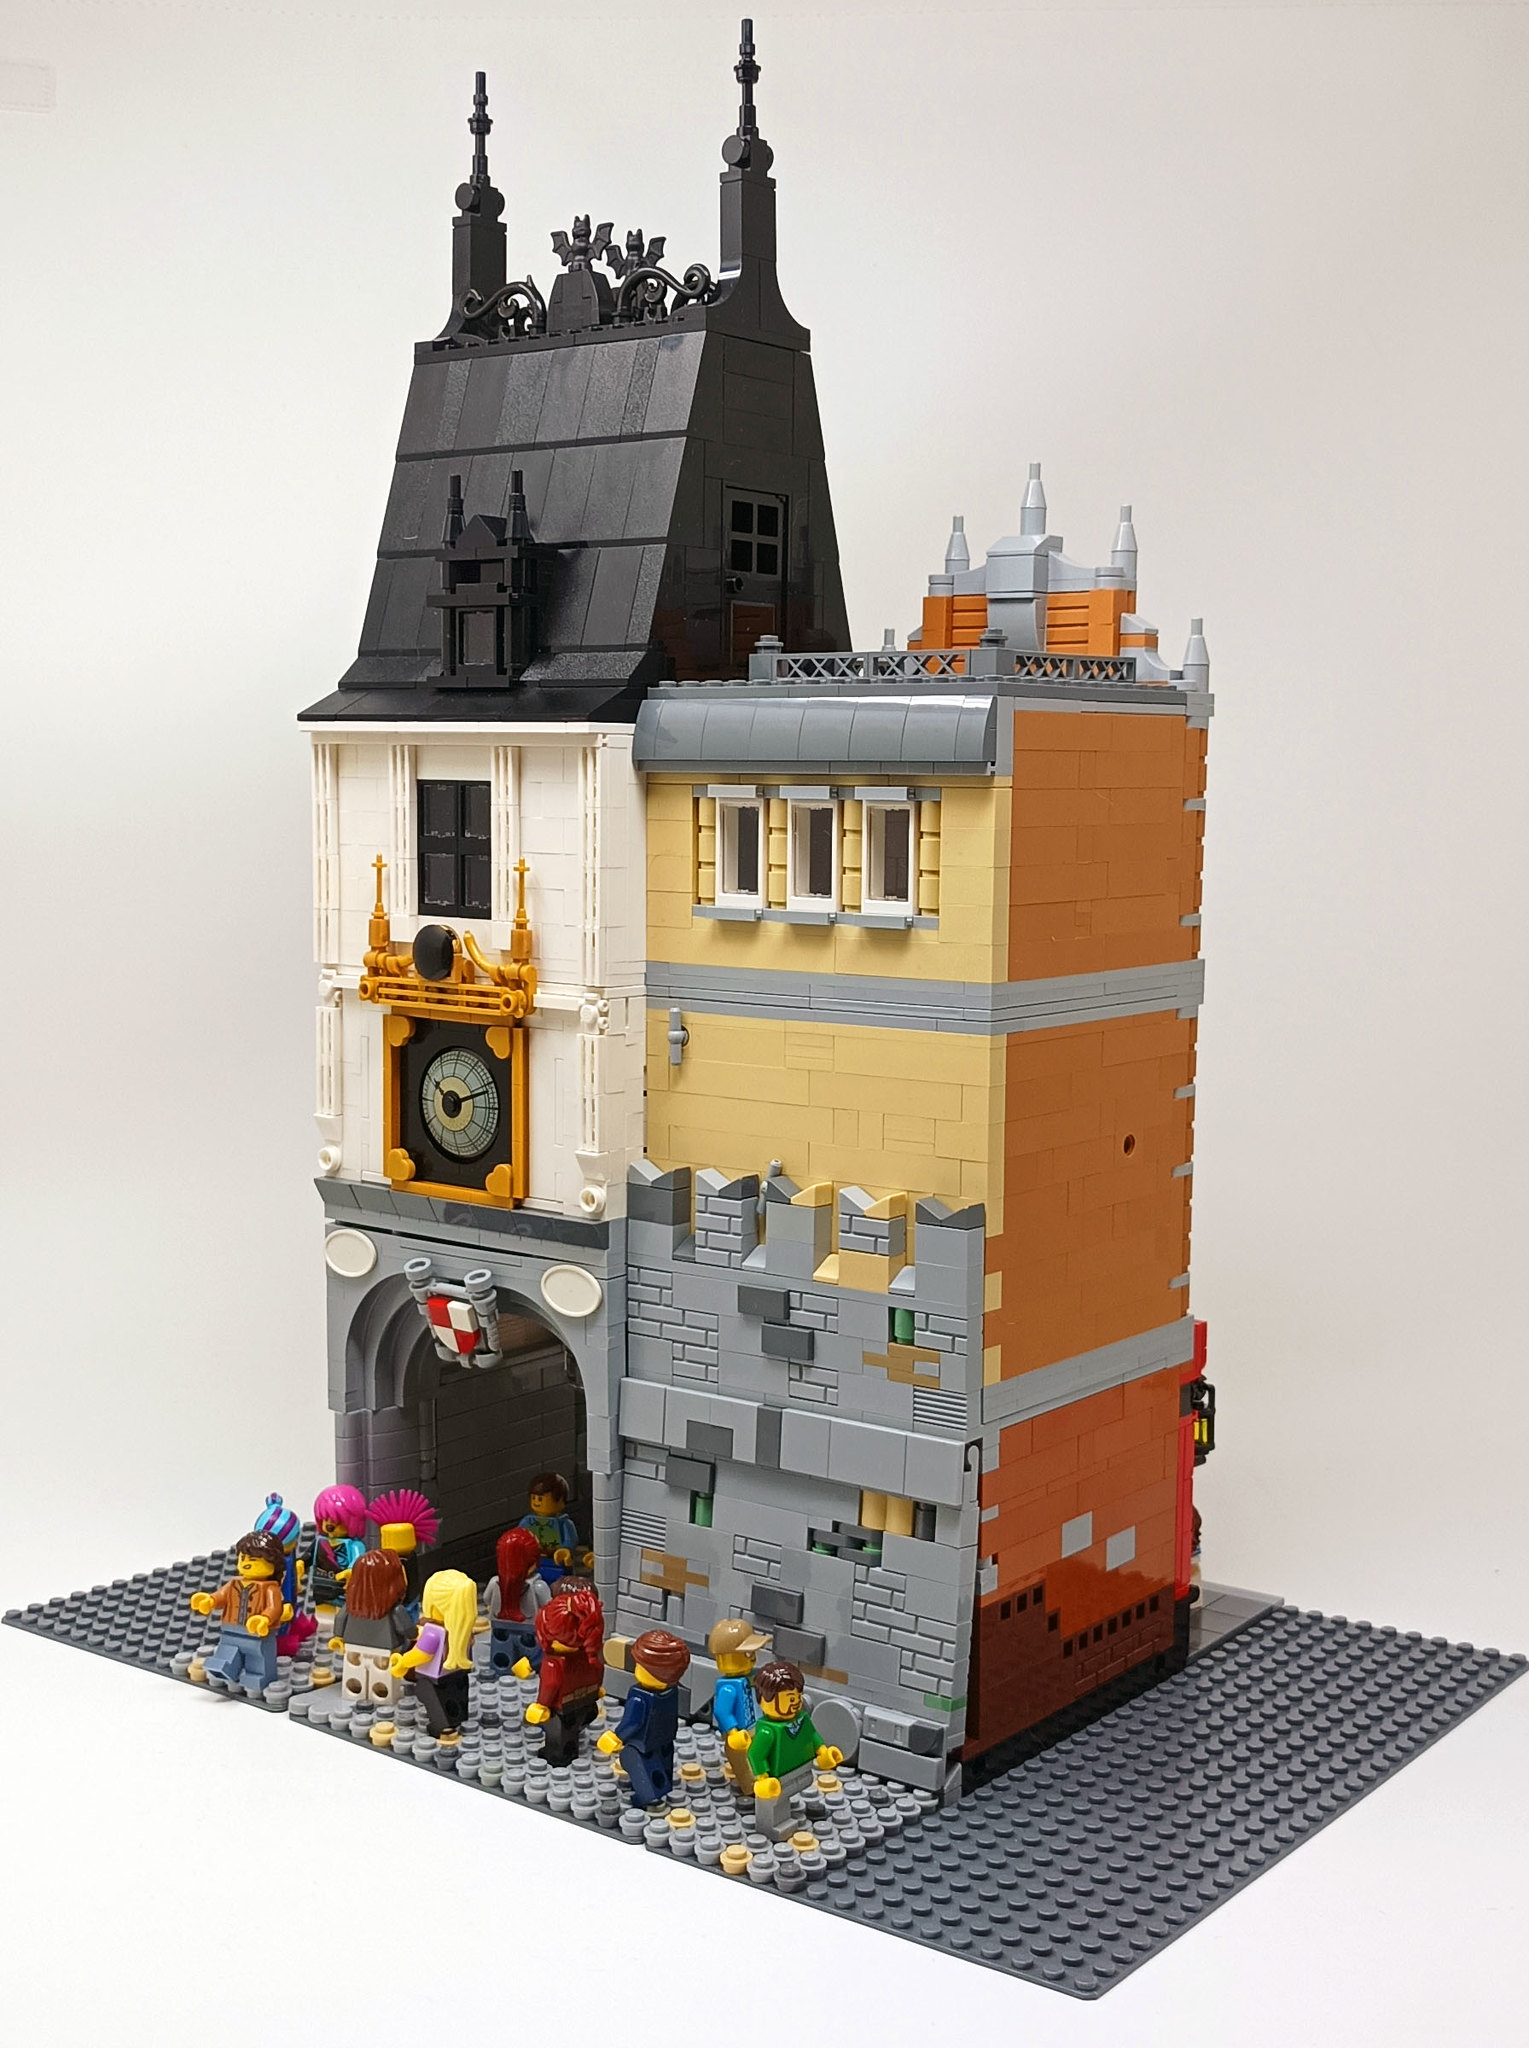 LEGO Themes Timeline - General LEGO Discussion - Eurobricks Forums